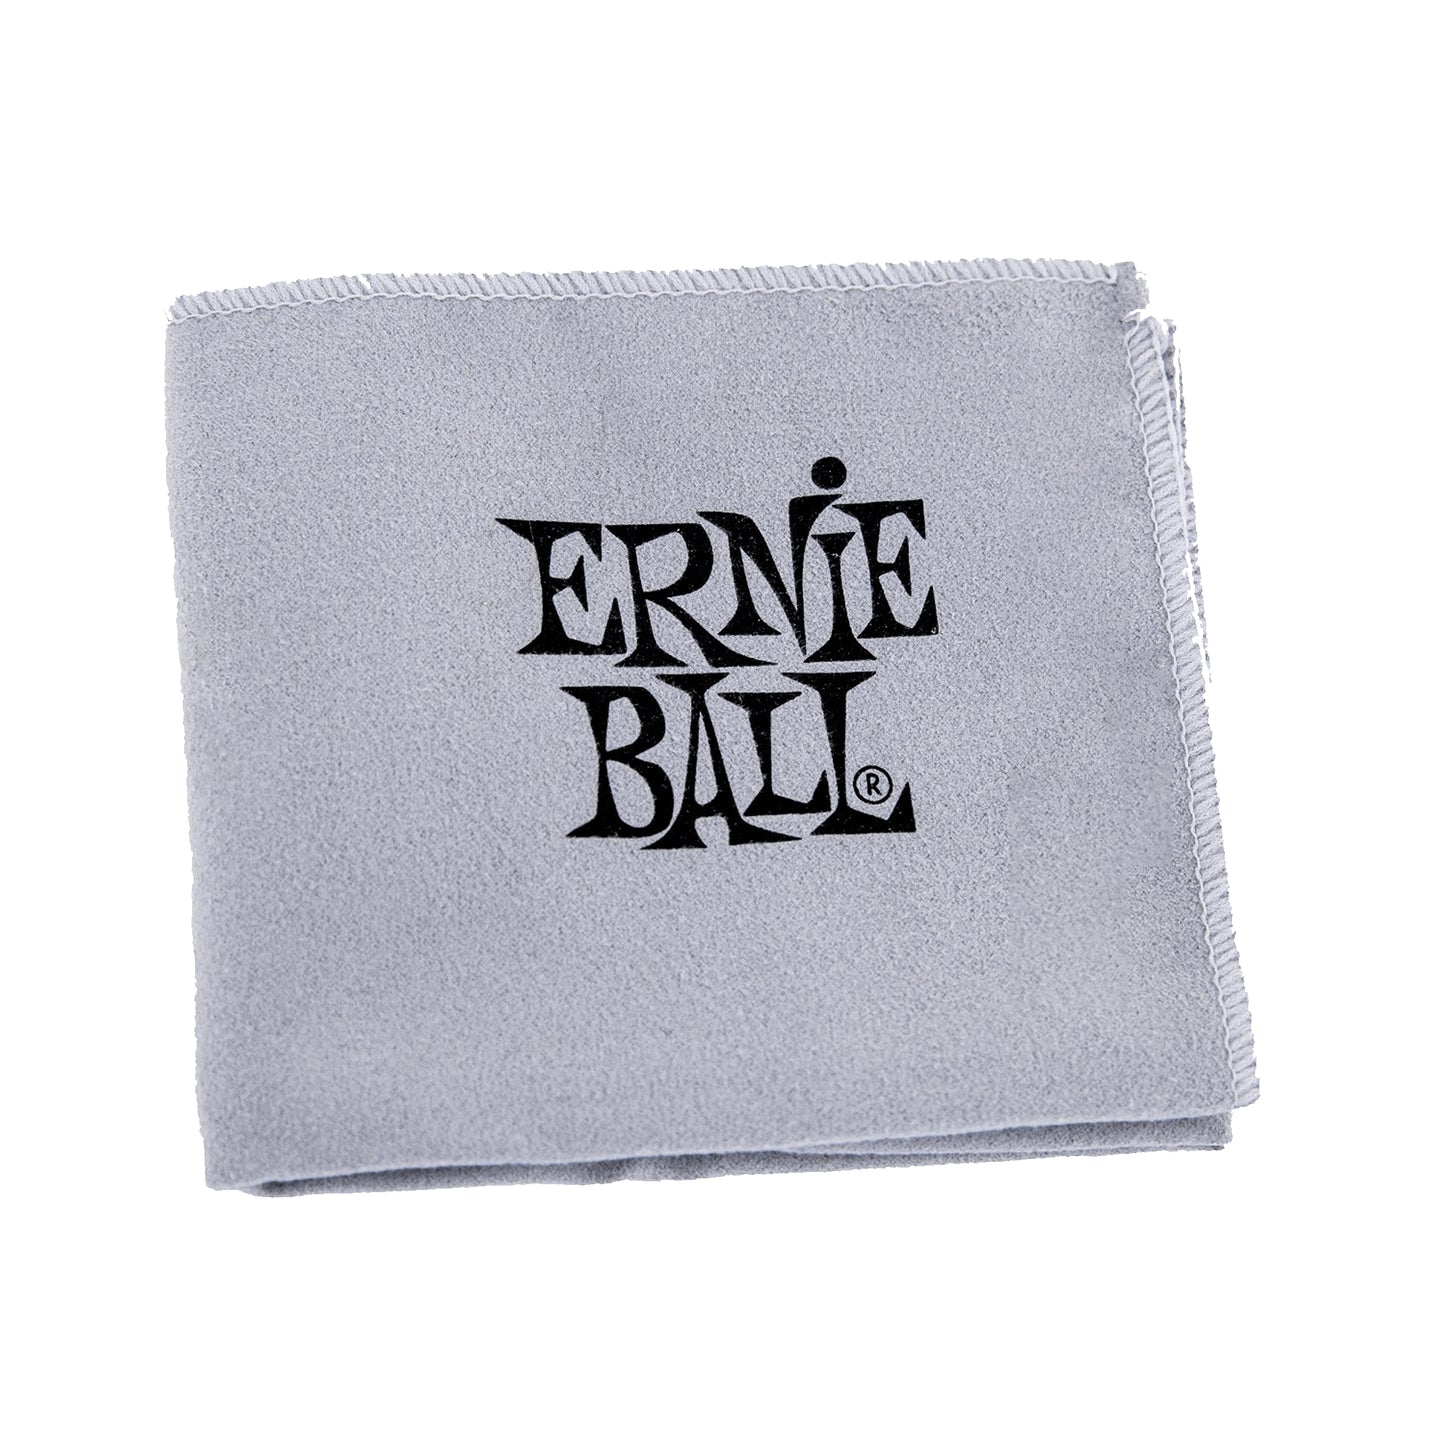 Ernie Ball Microfiber Instrument Polish Cloth